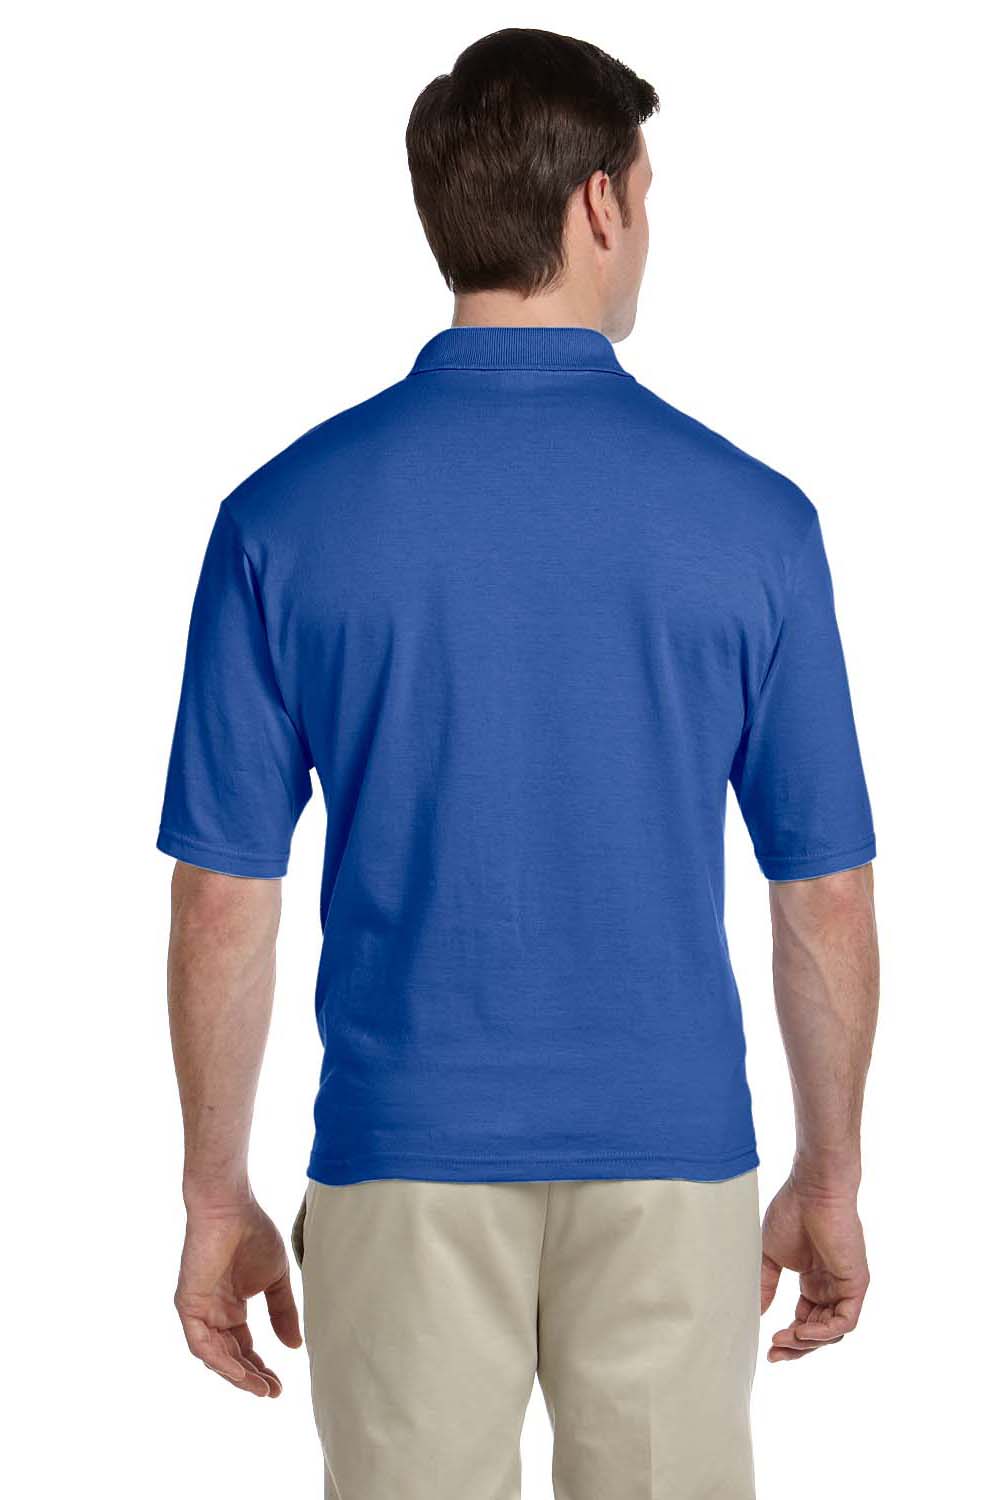 Jerzees 436P Mens SpotShield Stain Resistant Short Sleeve Polo Shirt w/ Pocket Royal Blue Back